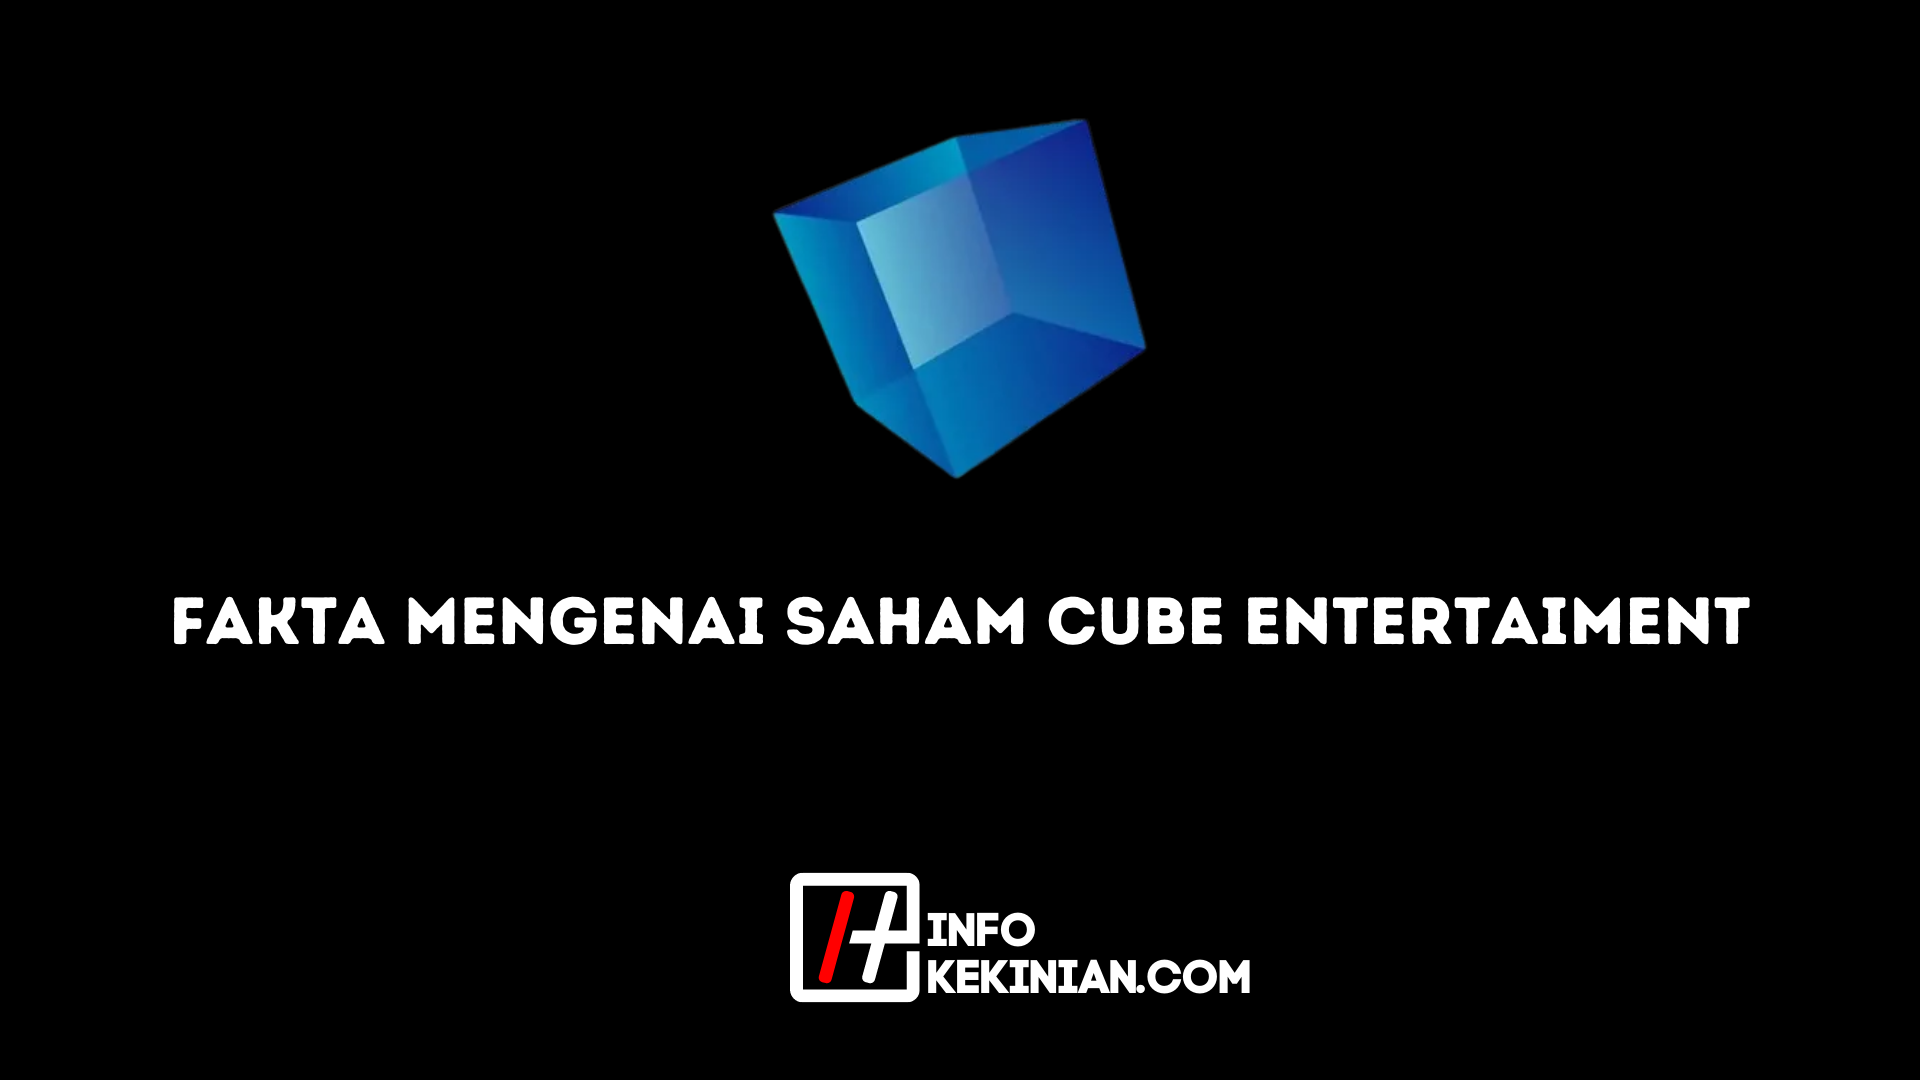 Fakta Mengenai Saham Cube Entertaiment